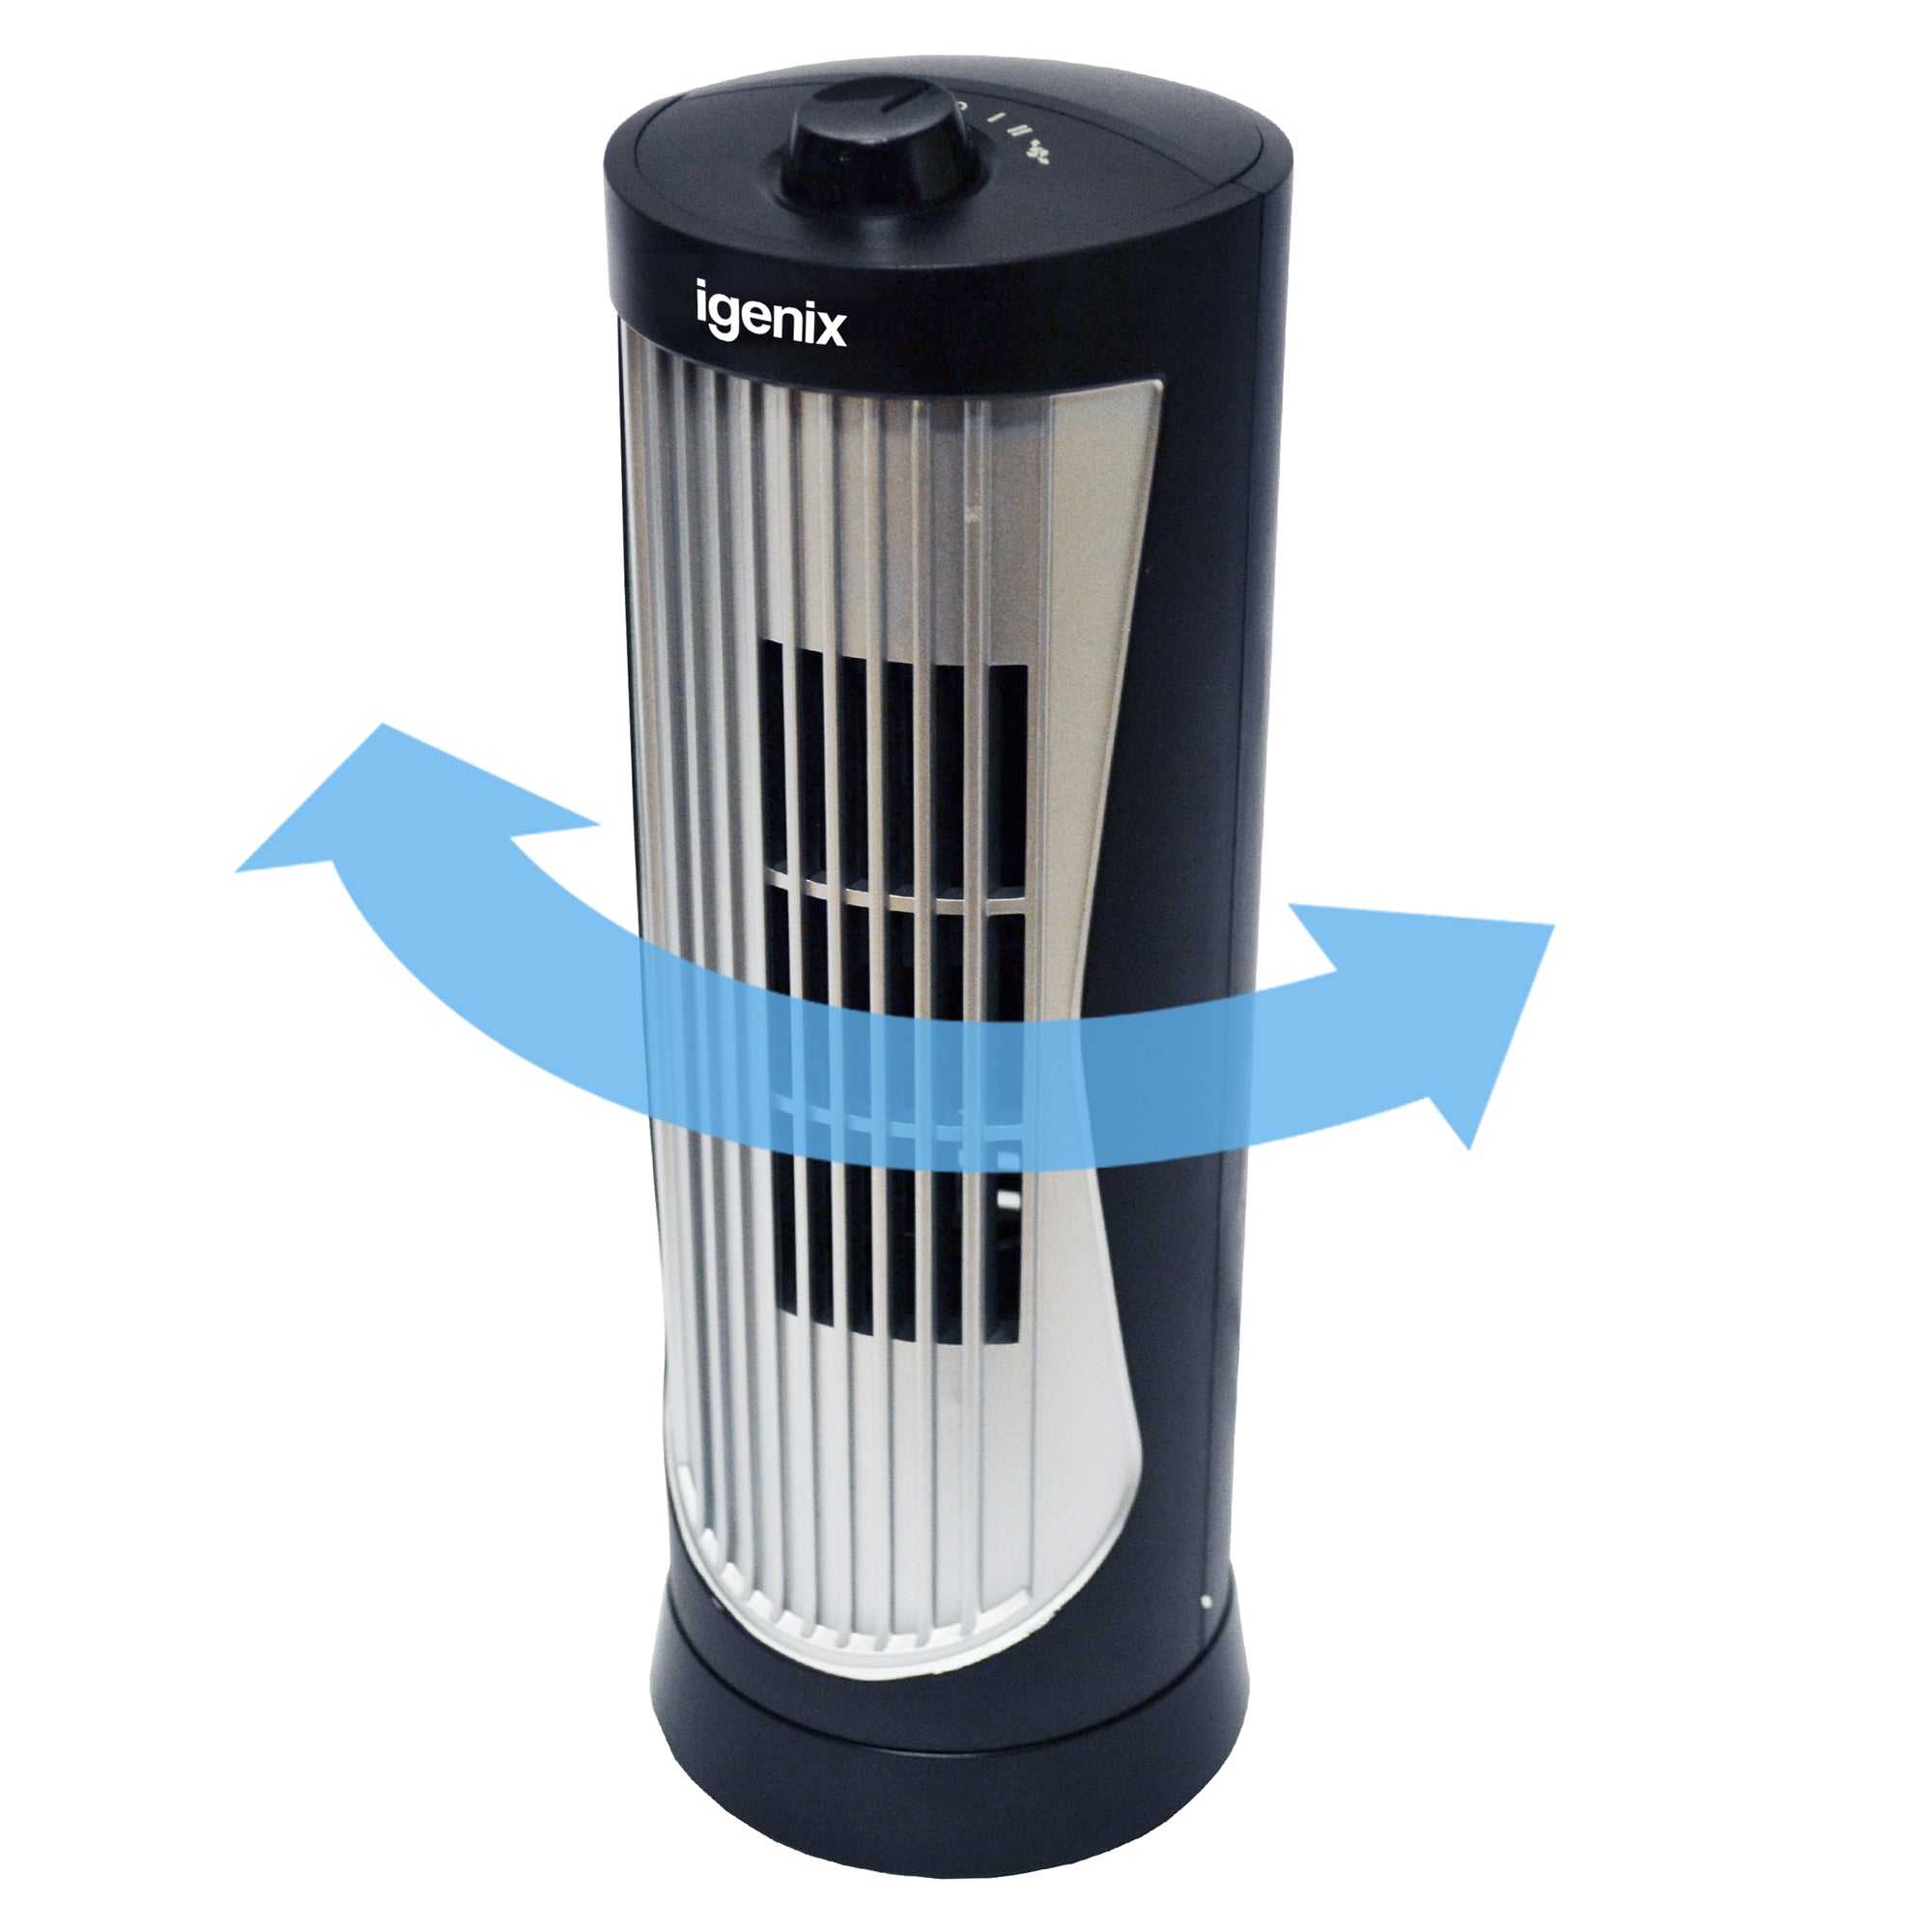 Mini Tower Fan, Oscillating, 12 Inch, Black